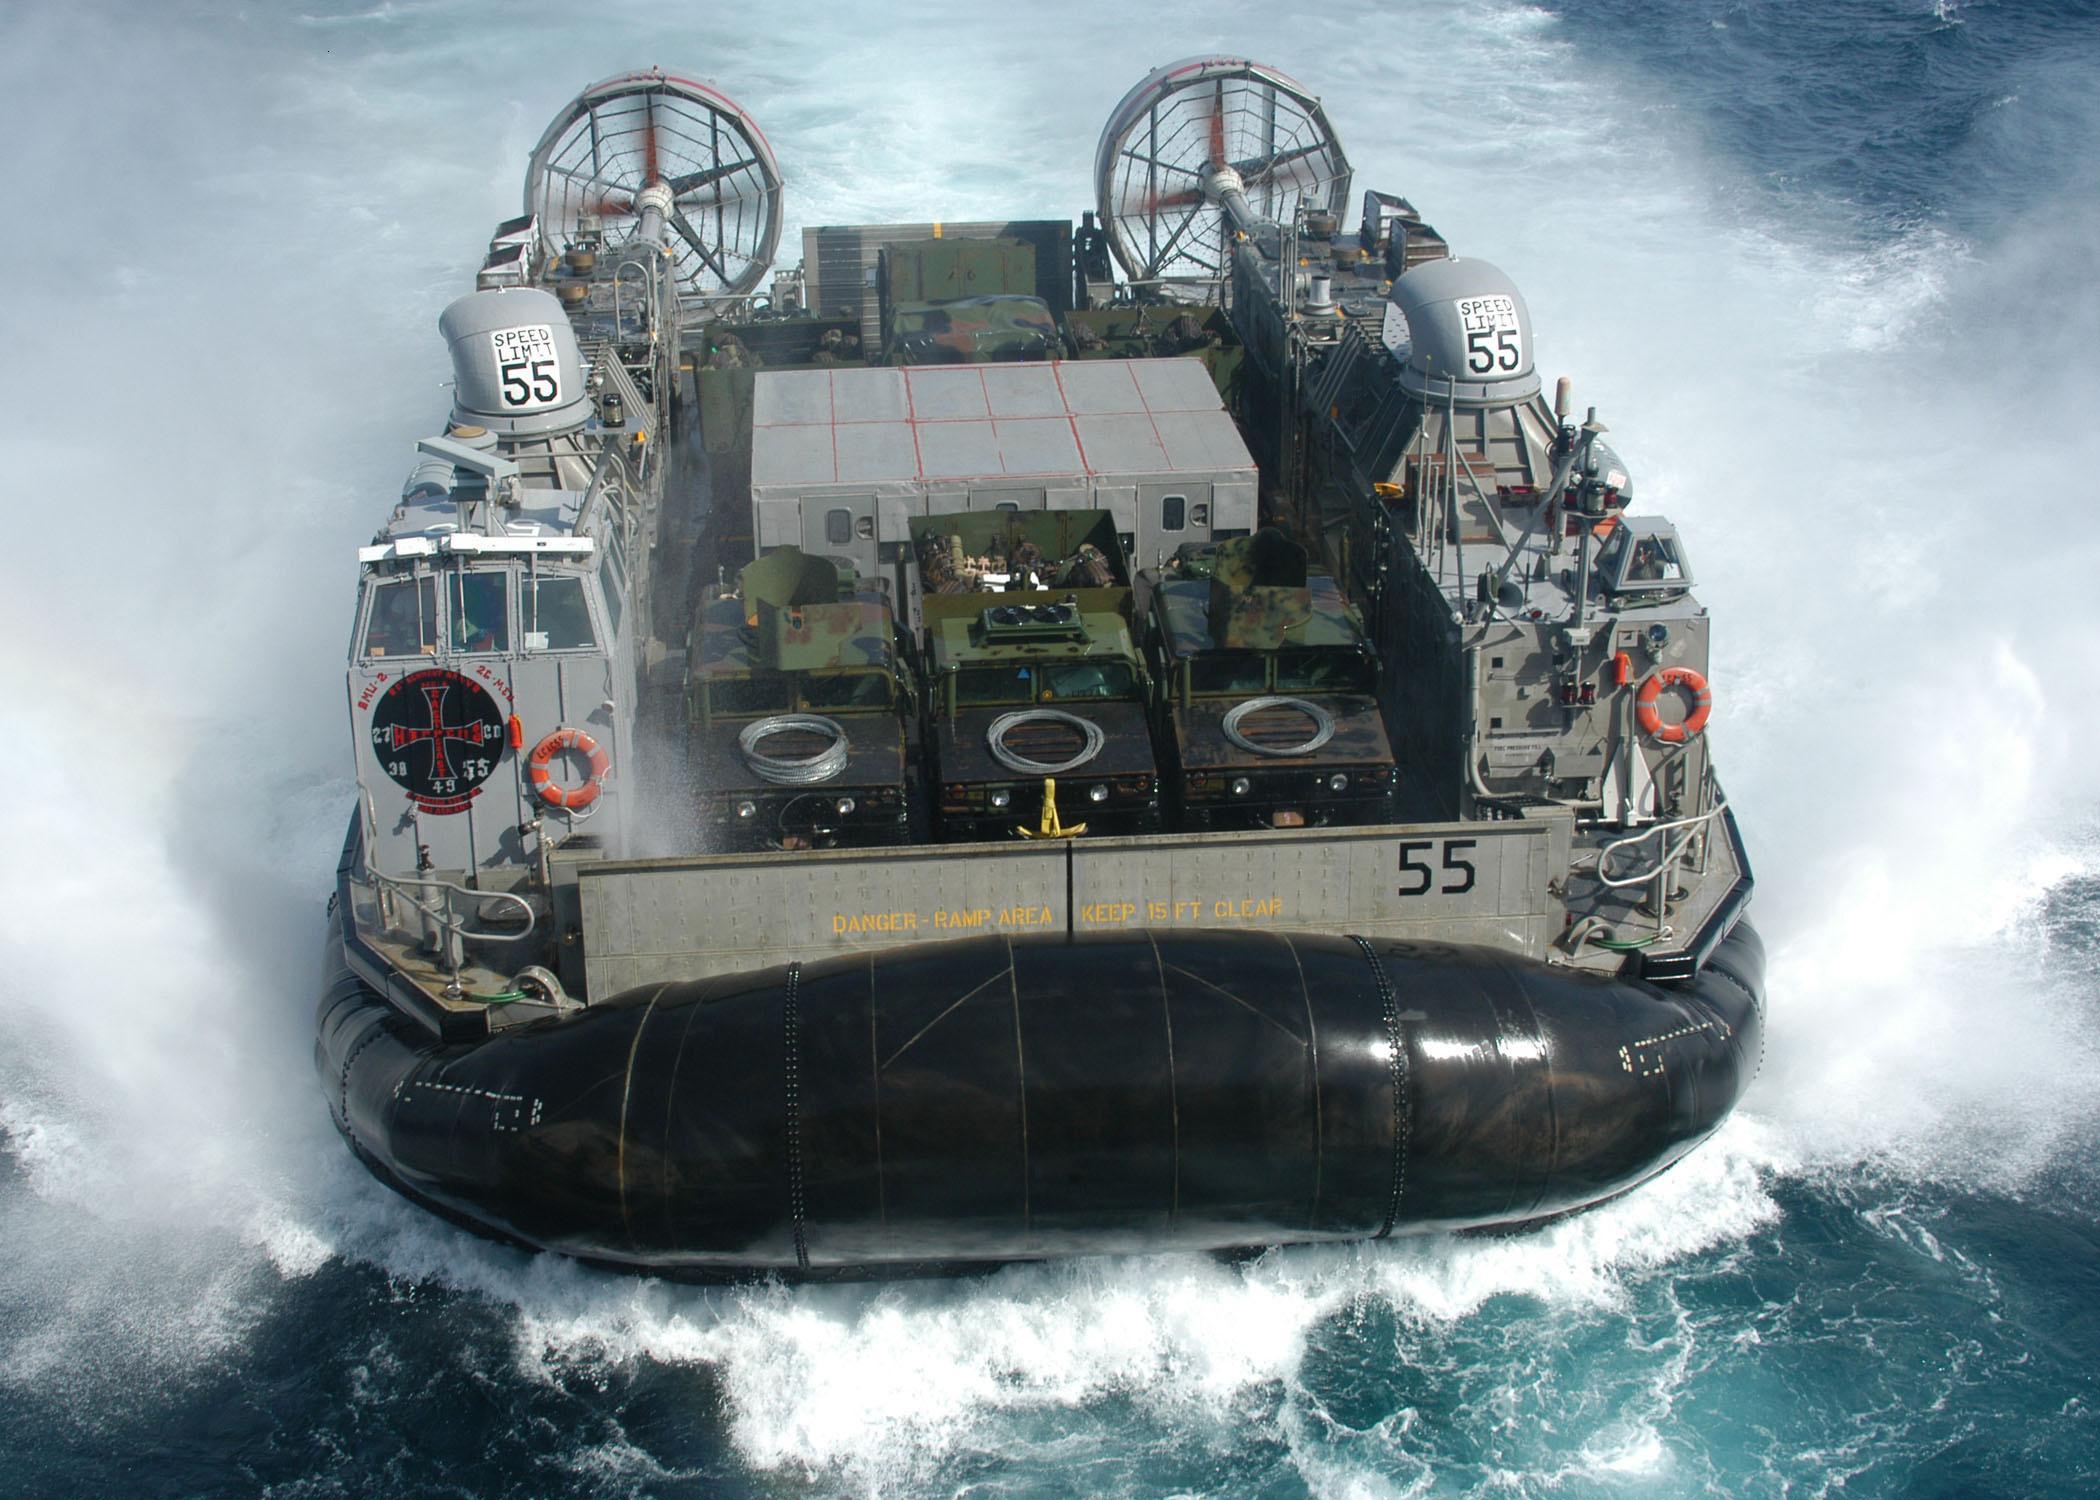 US Navy Sailors Inside An Amphibious Assault Ship — Or A Lost Aliens Scene